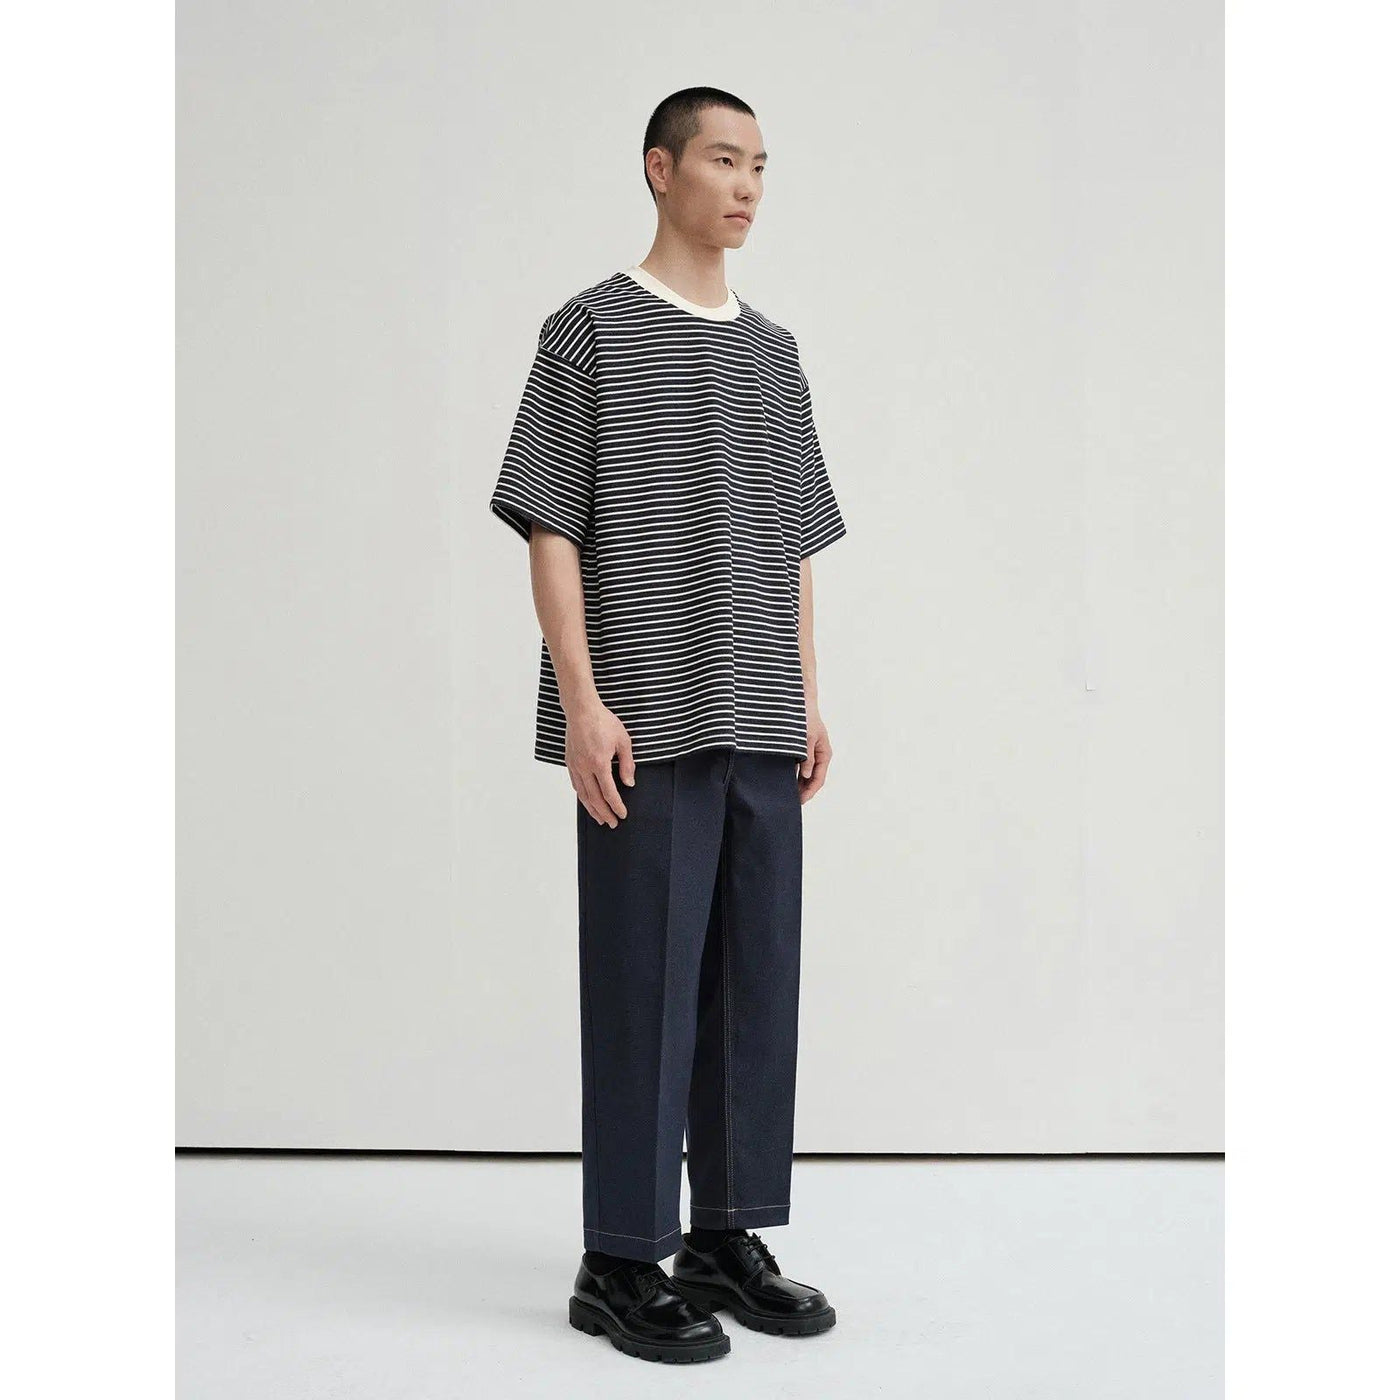 Narrow Stripes T-Shirt Korean Street Fashion T-Shirt By NANS Shop Online at OH Vault